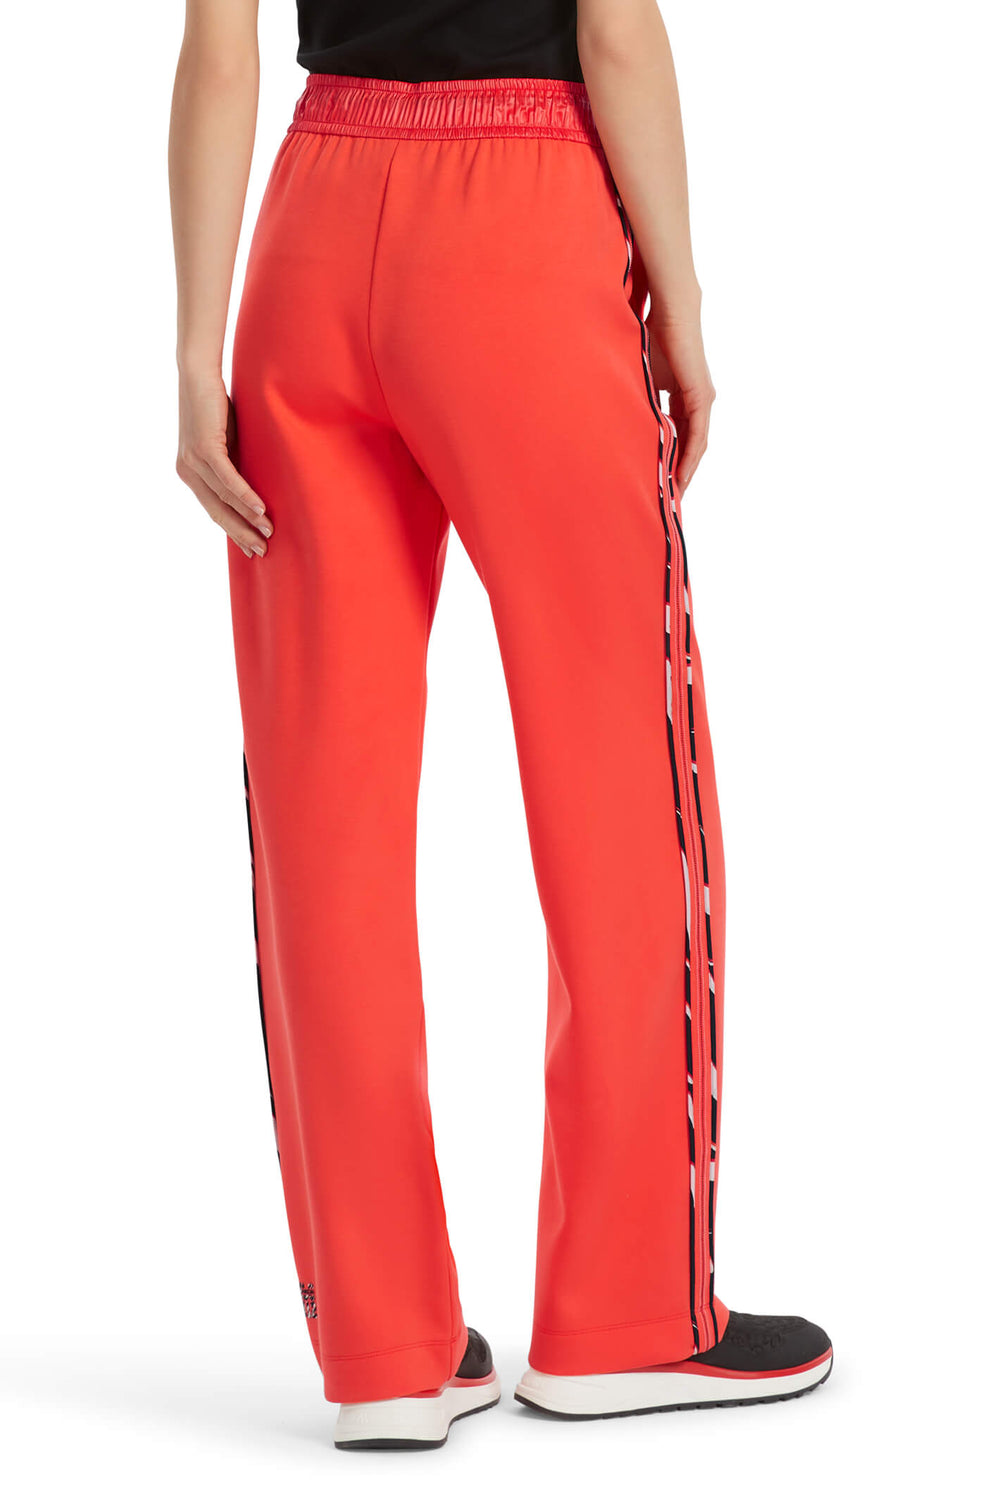 Marc Cain Sports VS 81.25 J06 Welby 278 Campari Orange Pull On Trousers - Olivia Grace Fashion